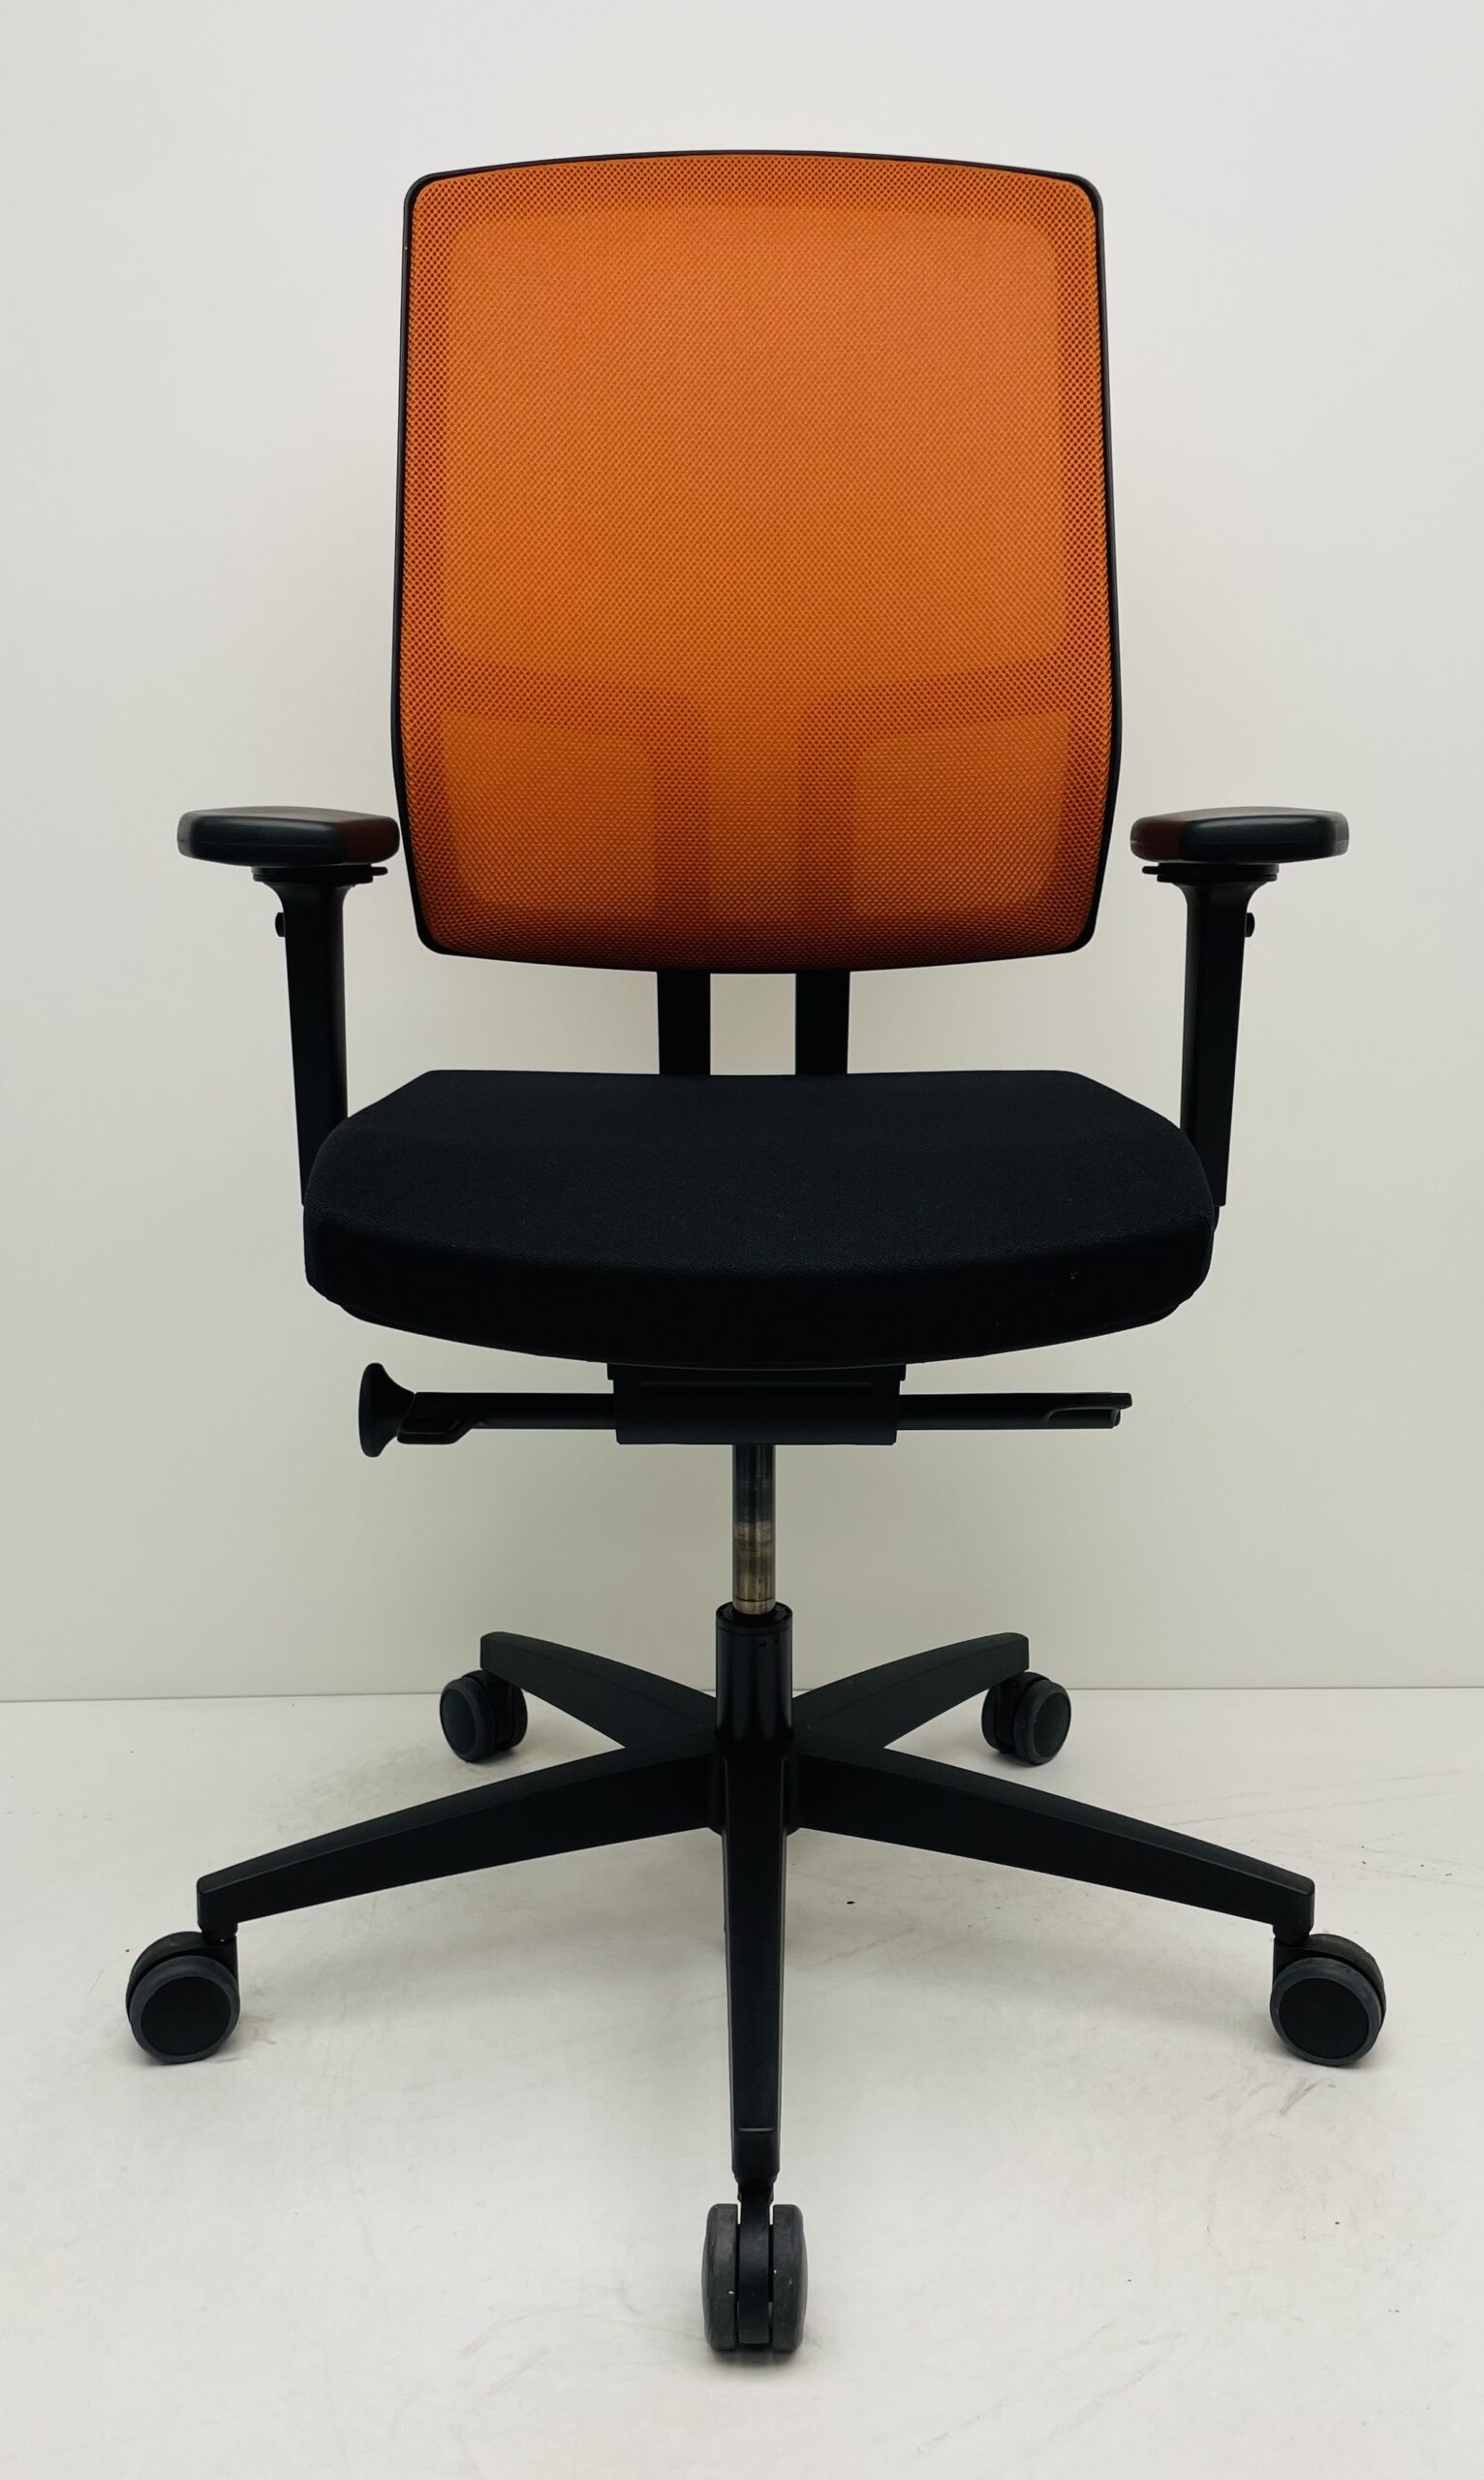 Refurbished Bureaustoel Beta Be Proud 200 zwart oranje